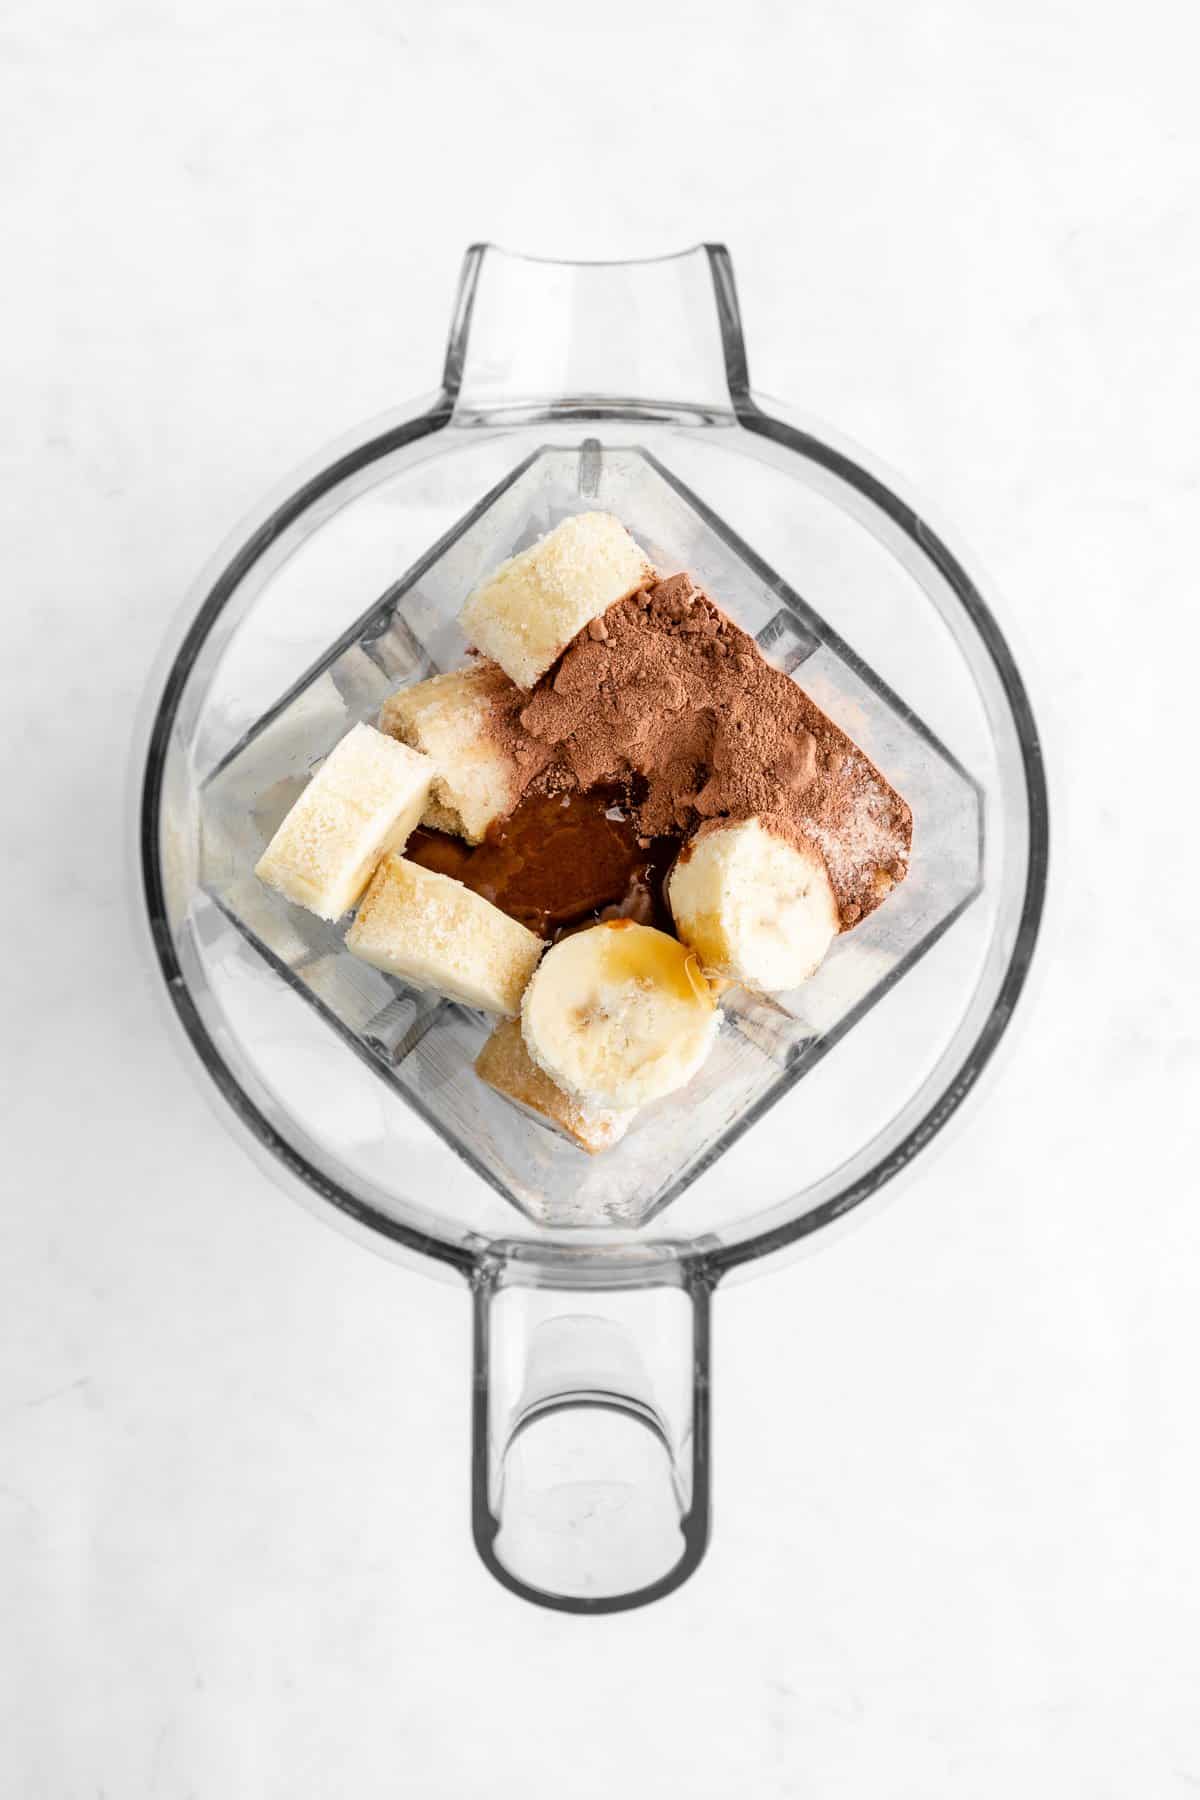 frozen bananas, cacao powder, almond milk, chocolate hazelnut butter, and maple syrup inside a vitamix blender